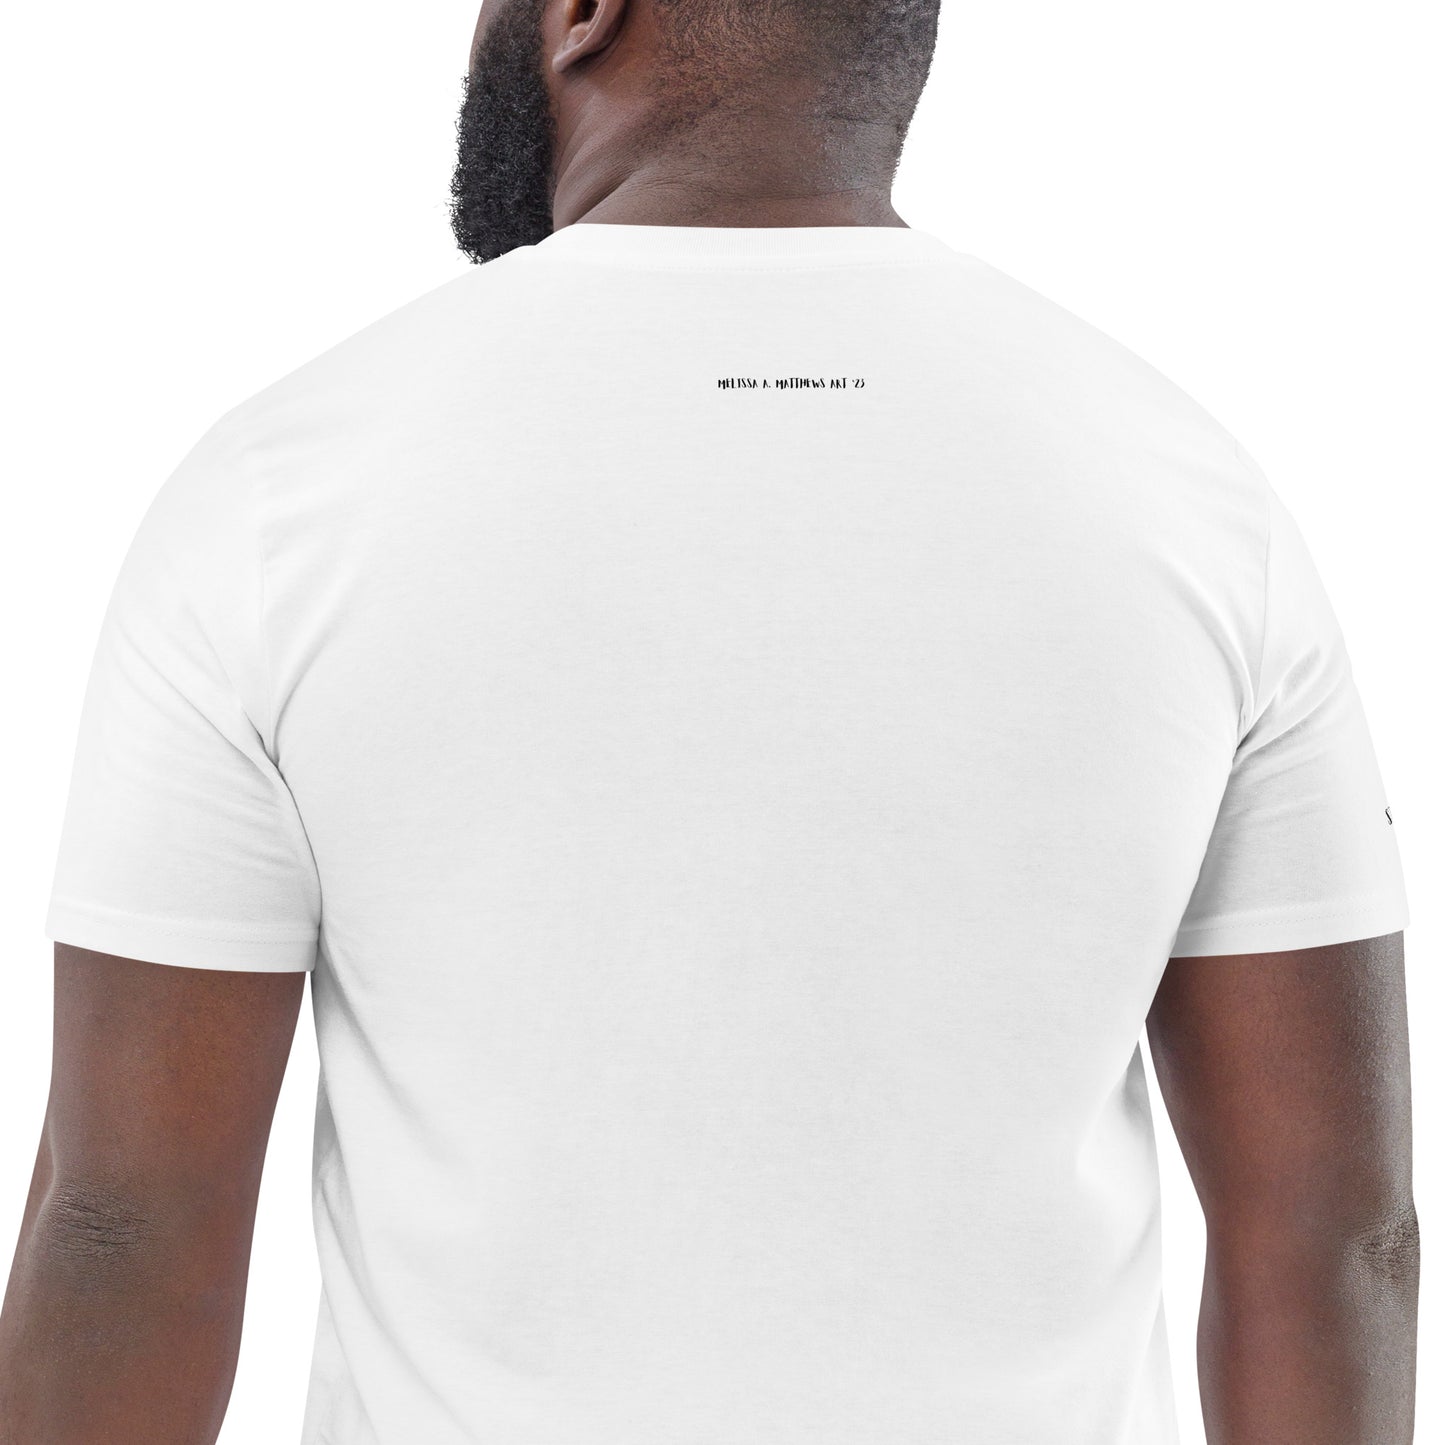 Demise of A Queen Pin Unisex organic cotton t-shirt